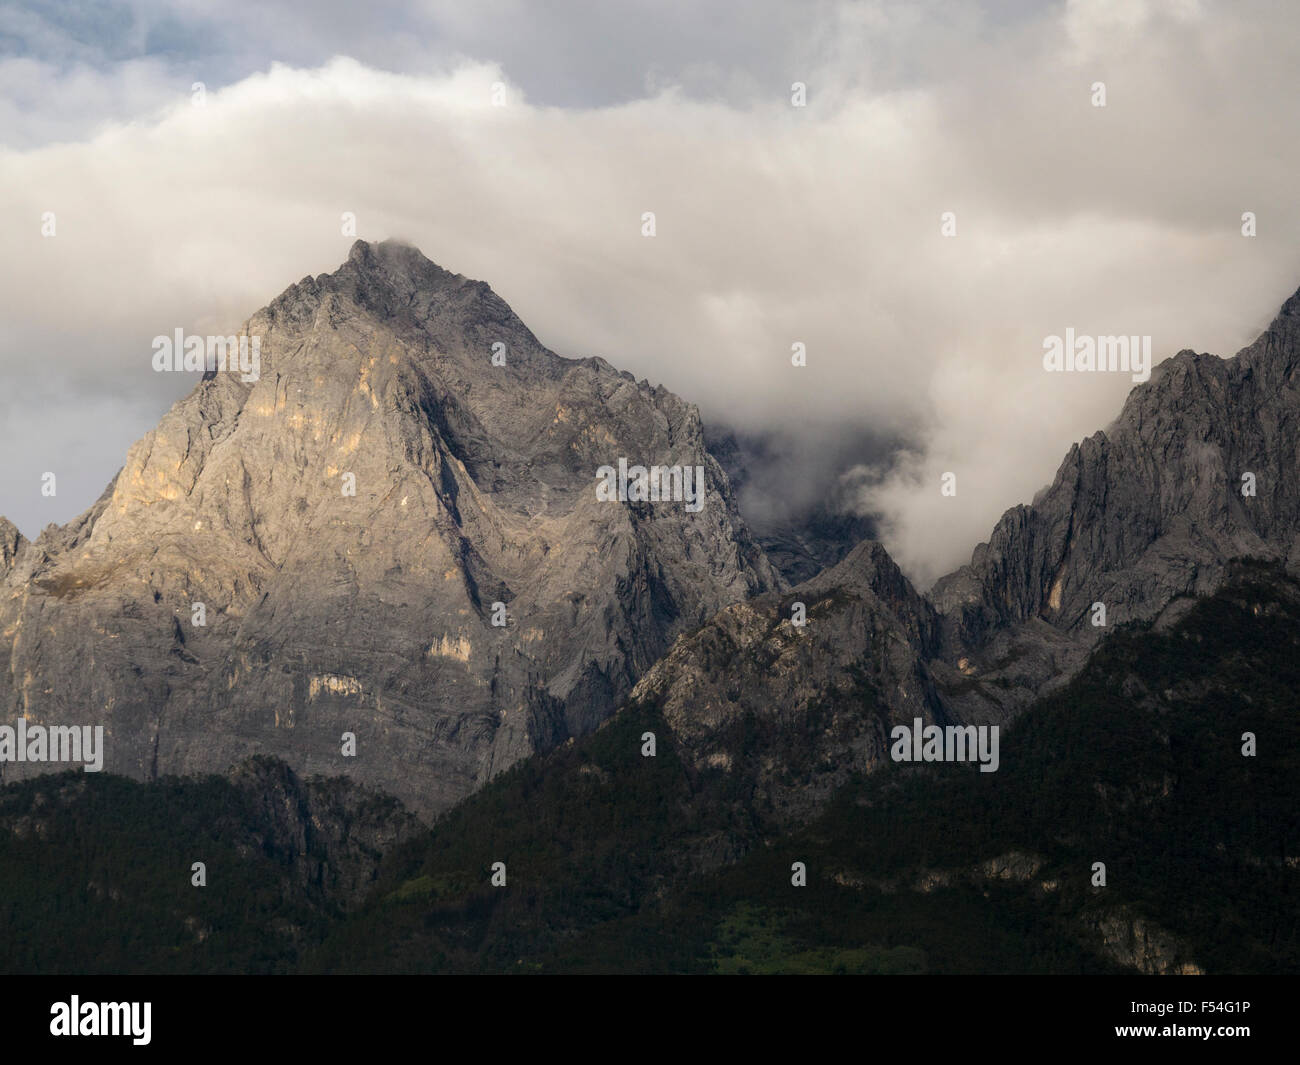 Hermoso paisaje de haba nieve pico montañoso Foto de stock